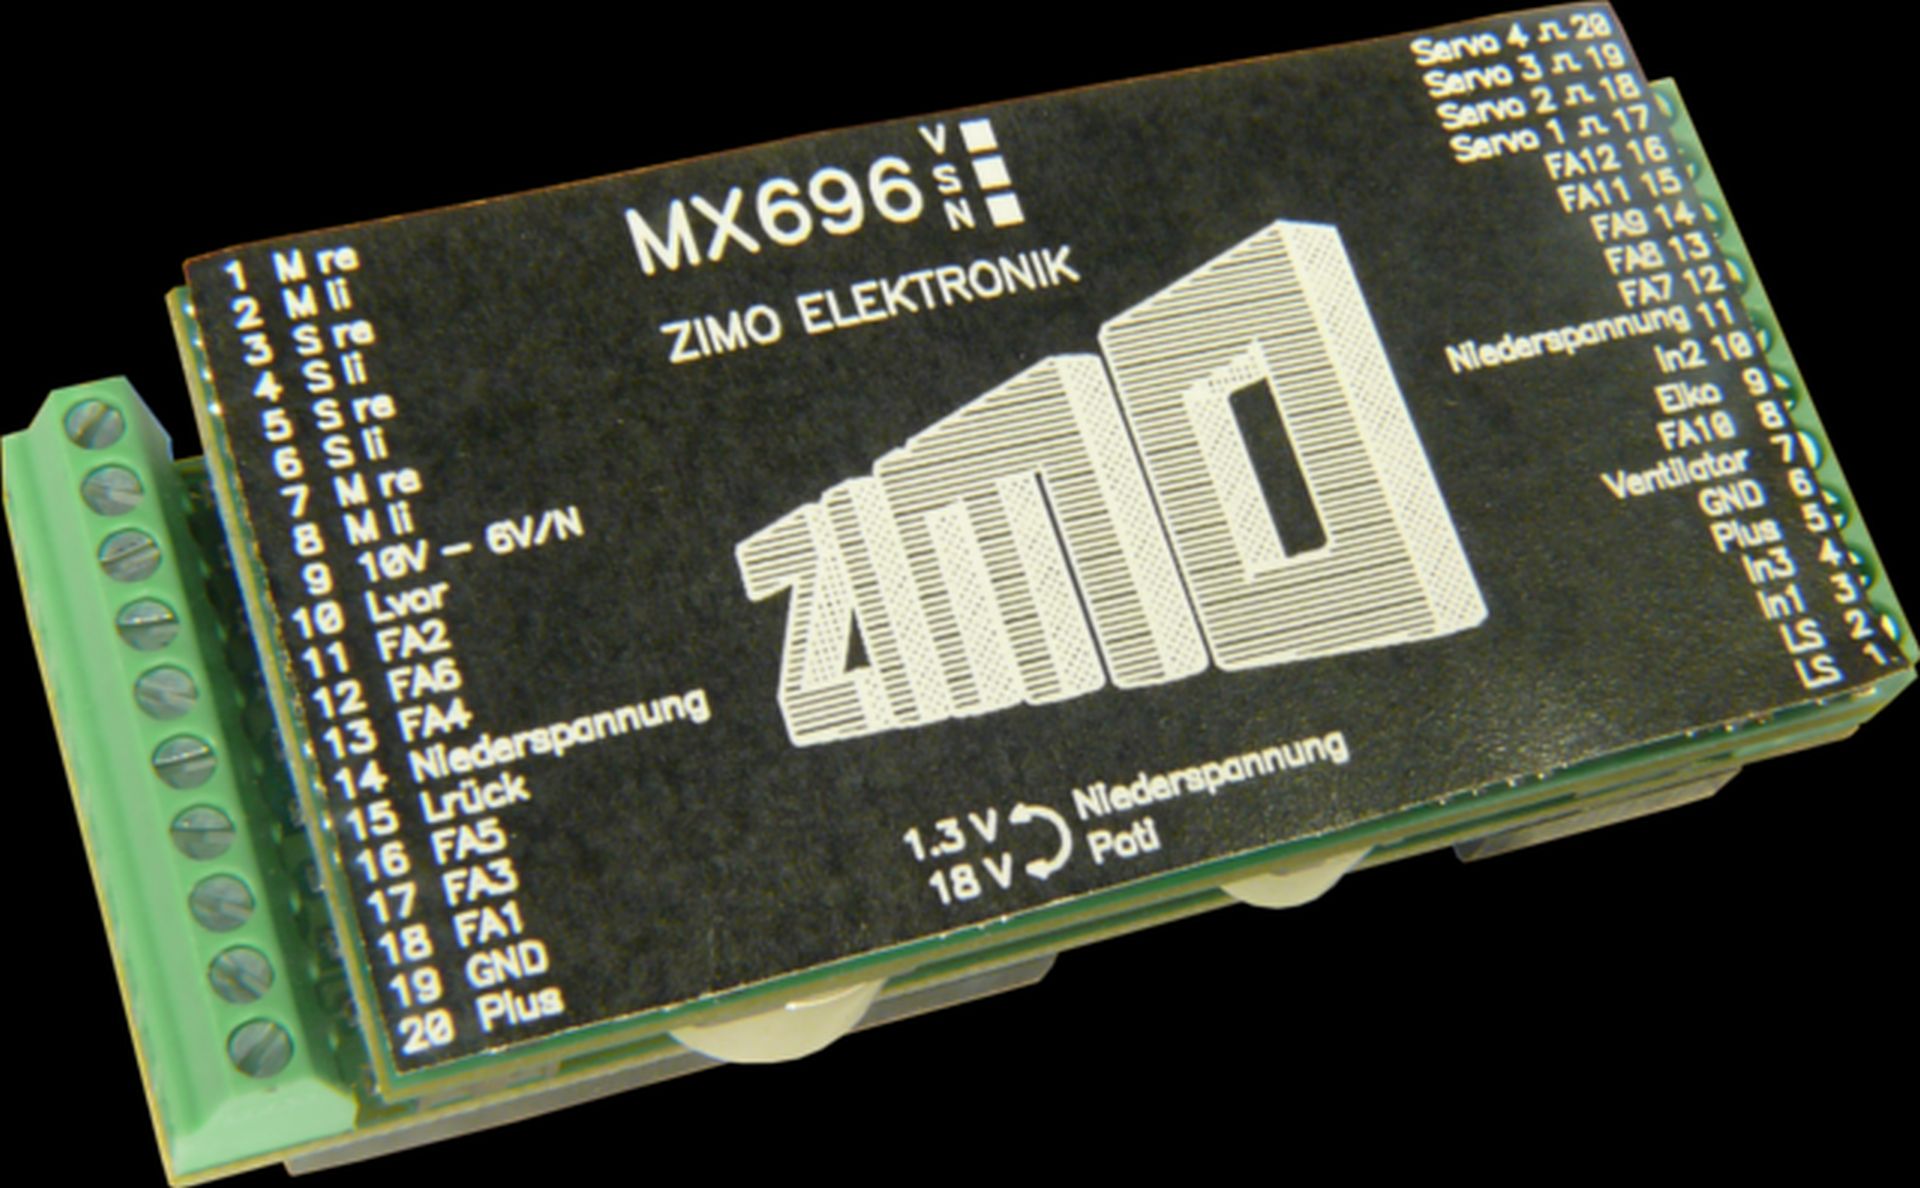 Zimo MX696KS - Sounddecoder 5A, 9 Funktionsausg., 4 Servoausgänge